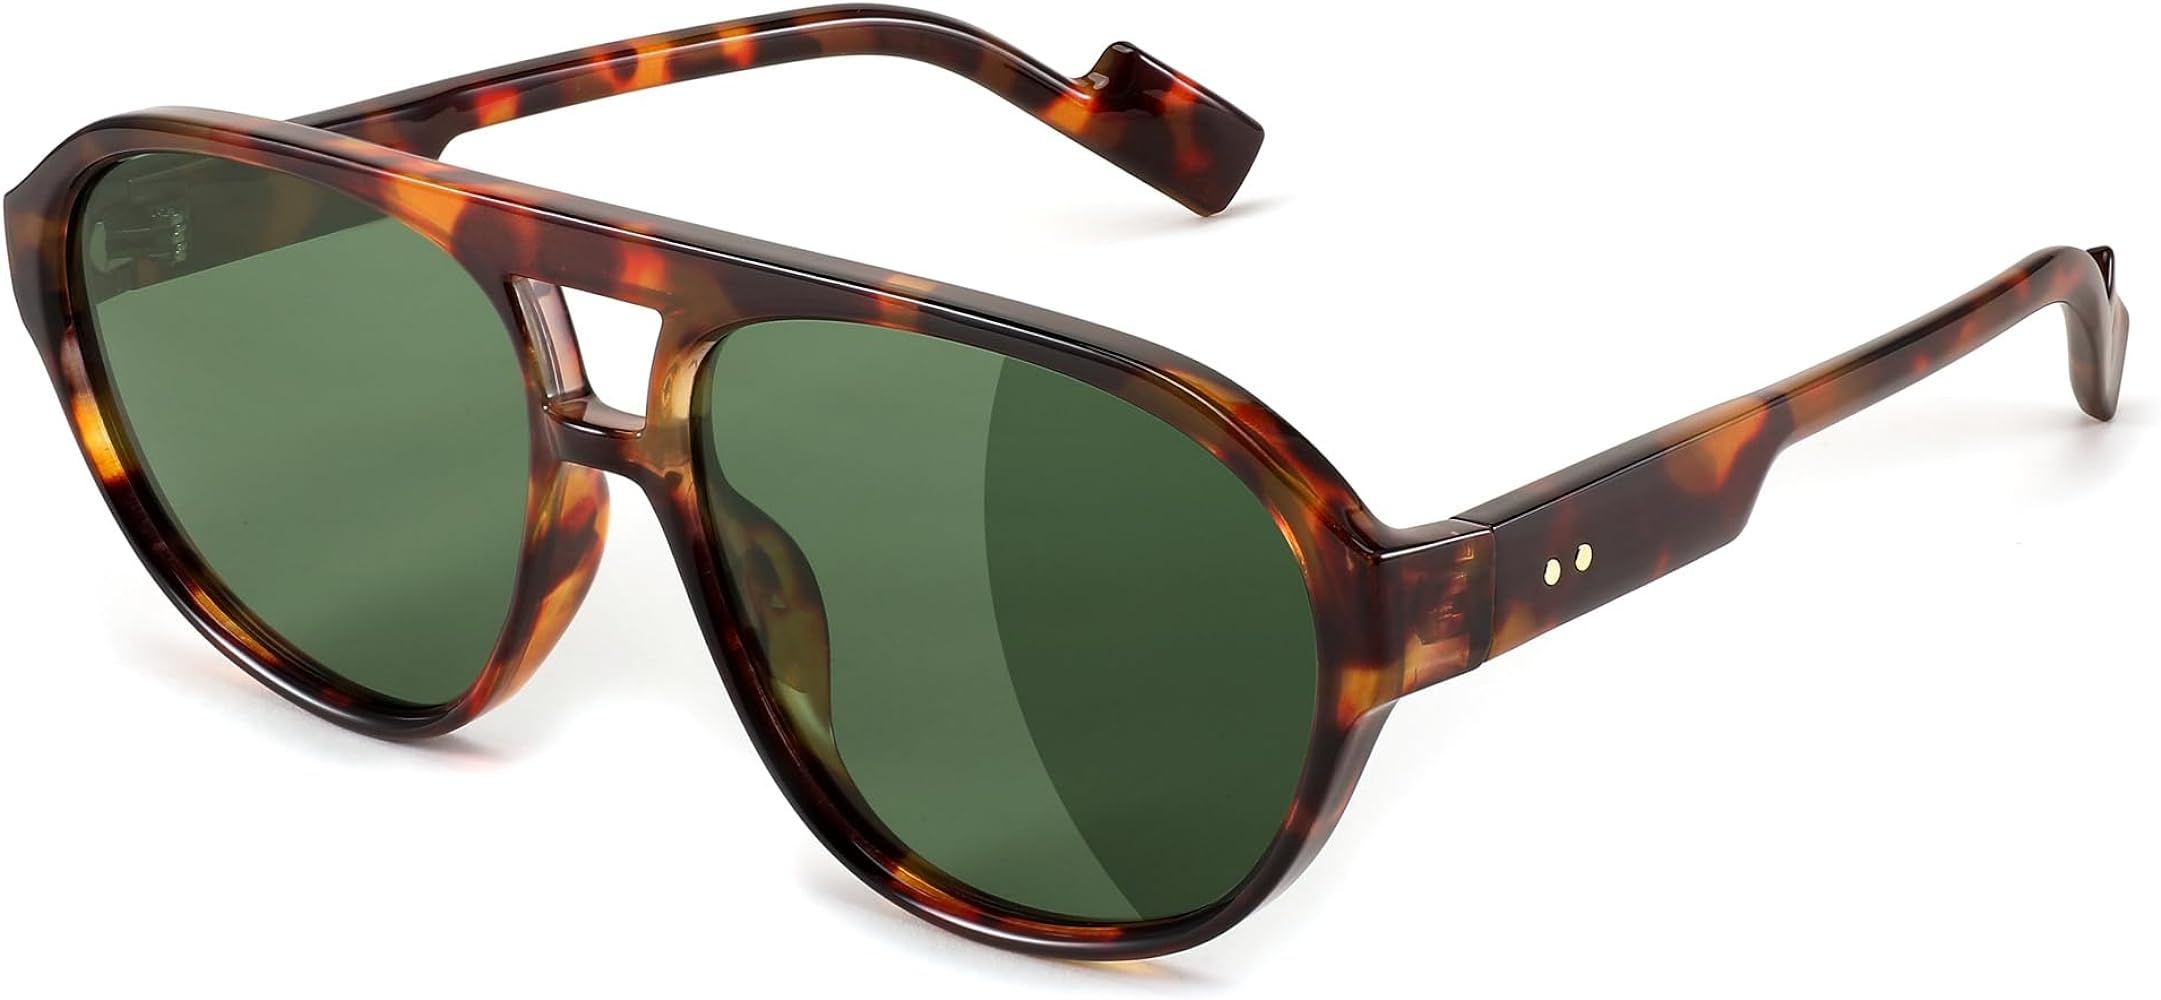 FEISEDY Sunglasses Women Men Polarized, Small 70s Aviator Frame, Retro Vintage Sun Glasses B2373 | Amazon (US)